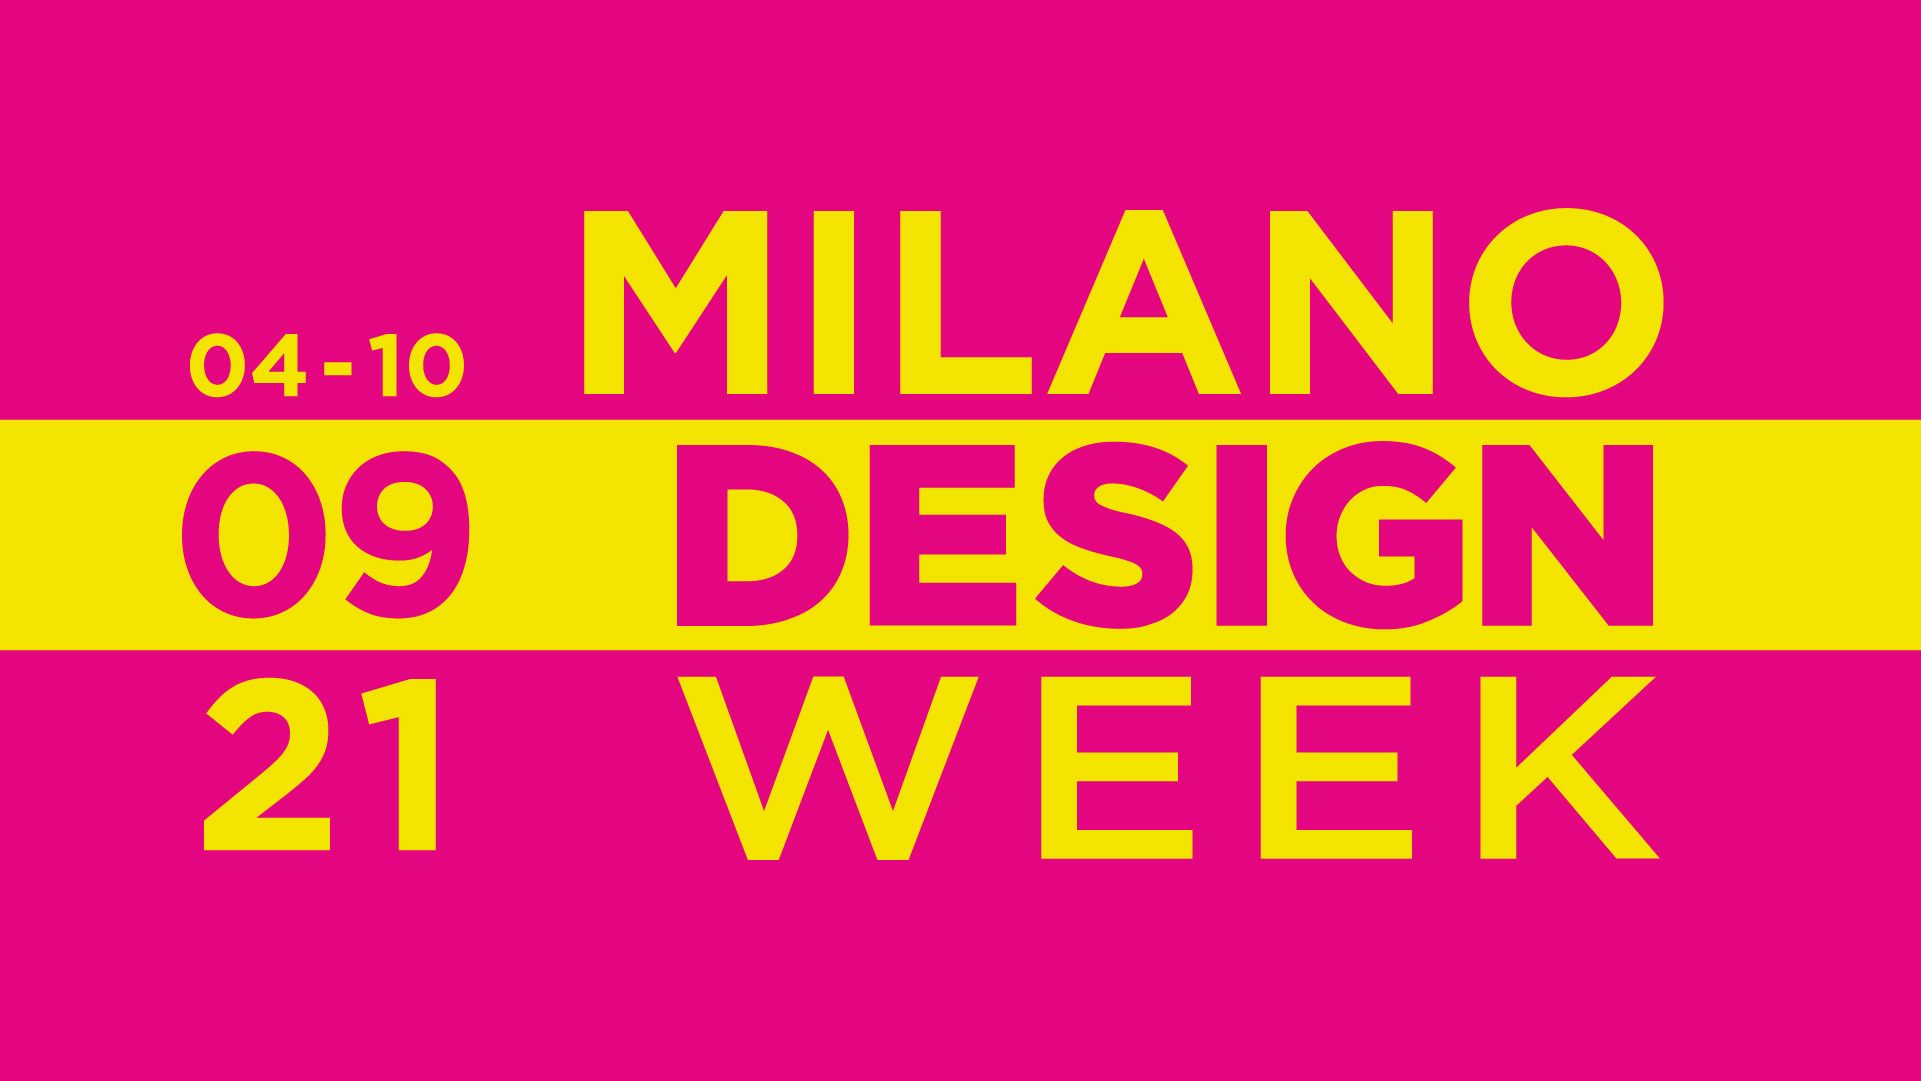 Milan Design Week  Toyota Motor Corporation Official Global Website